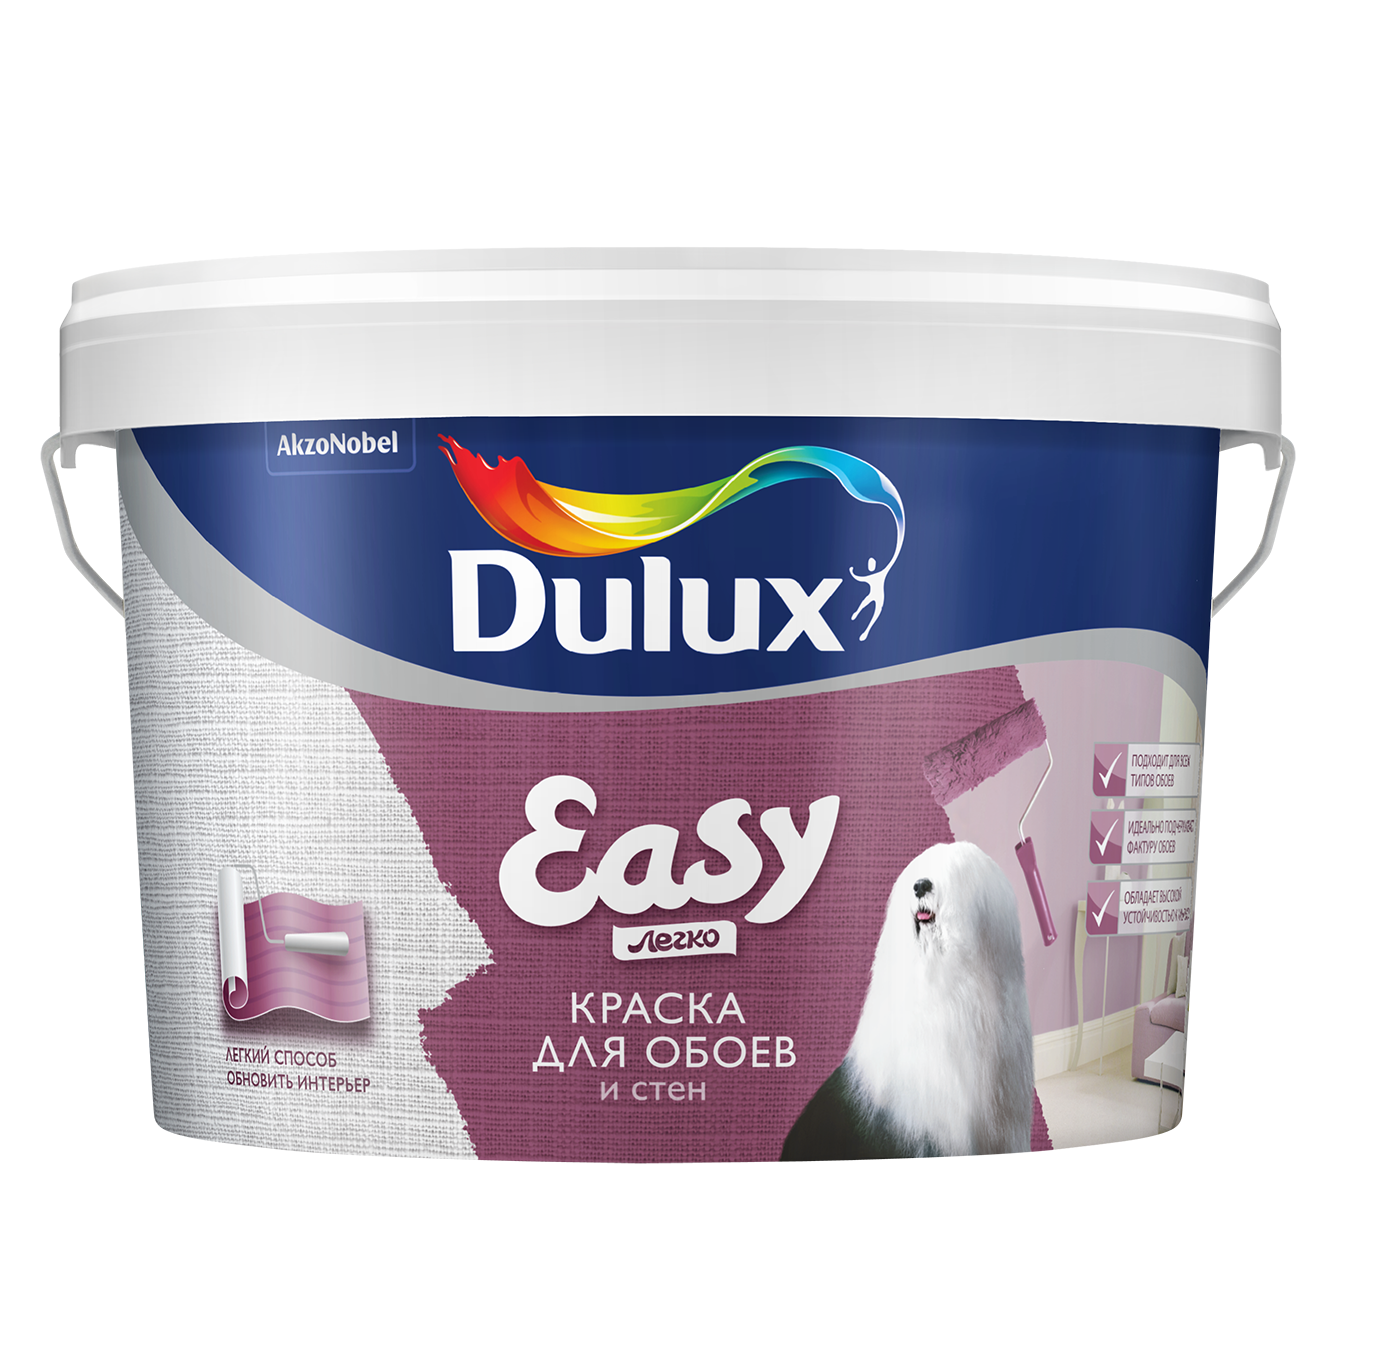 Dulux Easy матовая краска для обоев и стен